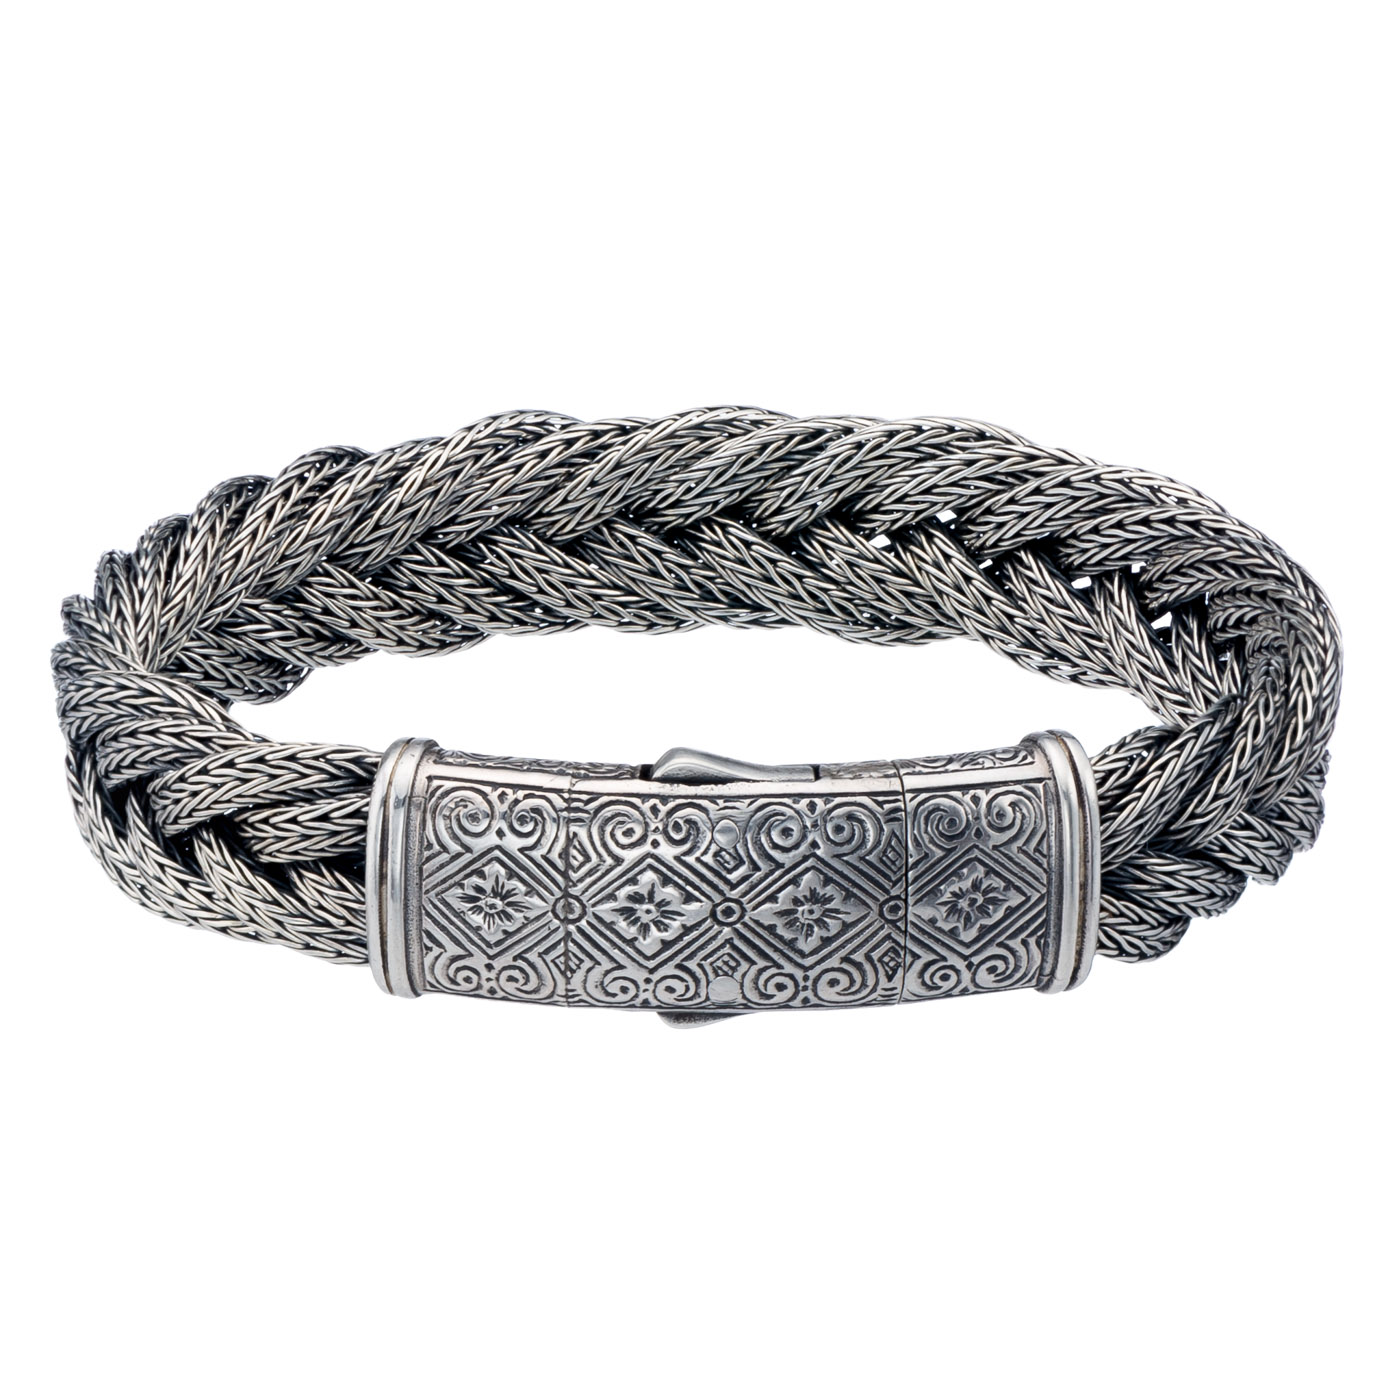 Minoas Braid chain Bracelet in Sterling silver